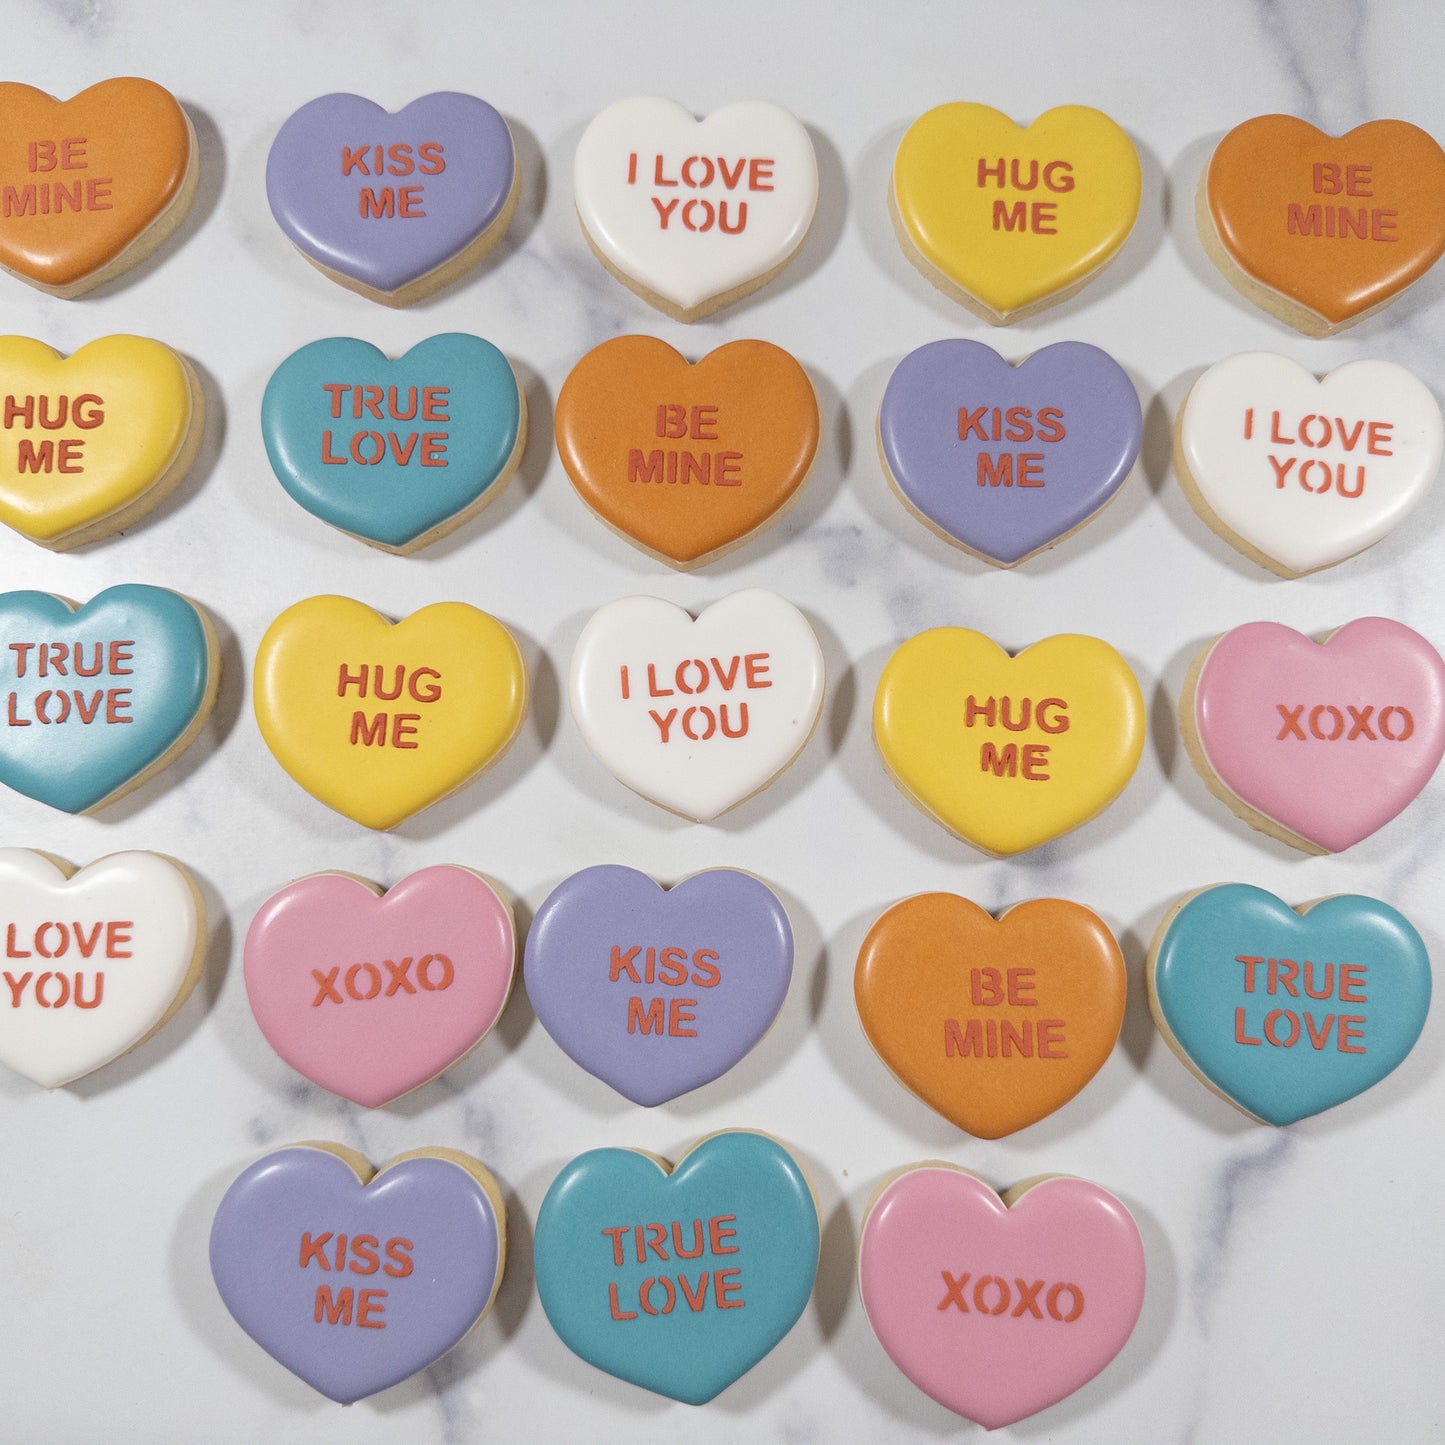 Mini Conversation Heart Sugar Cookies - Pack of 12